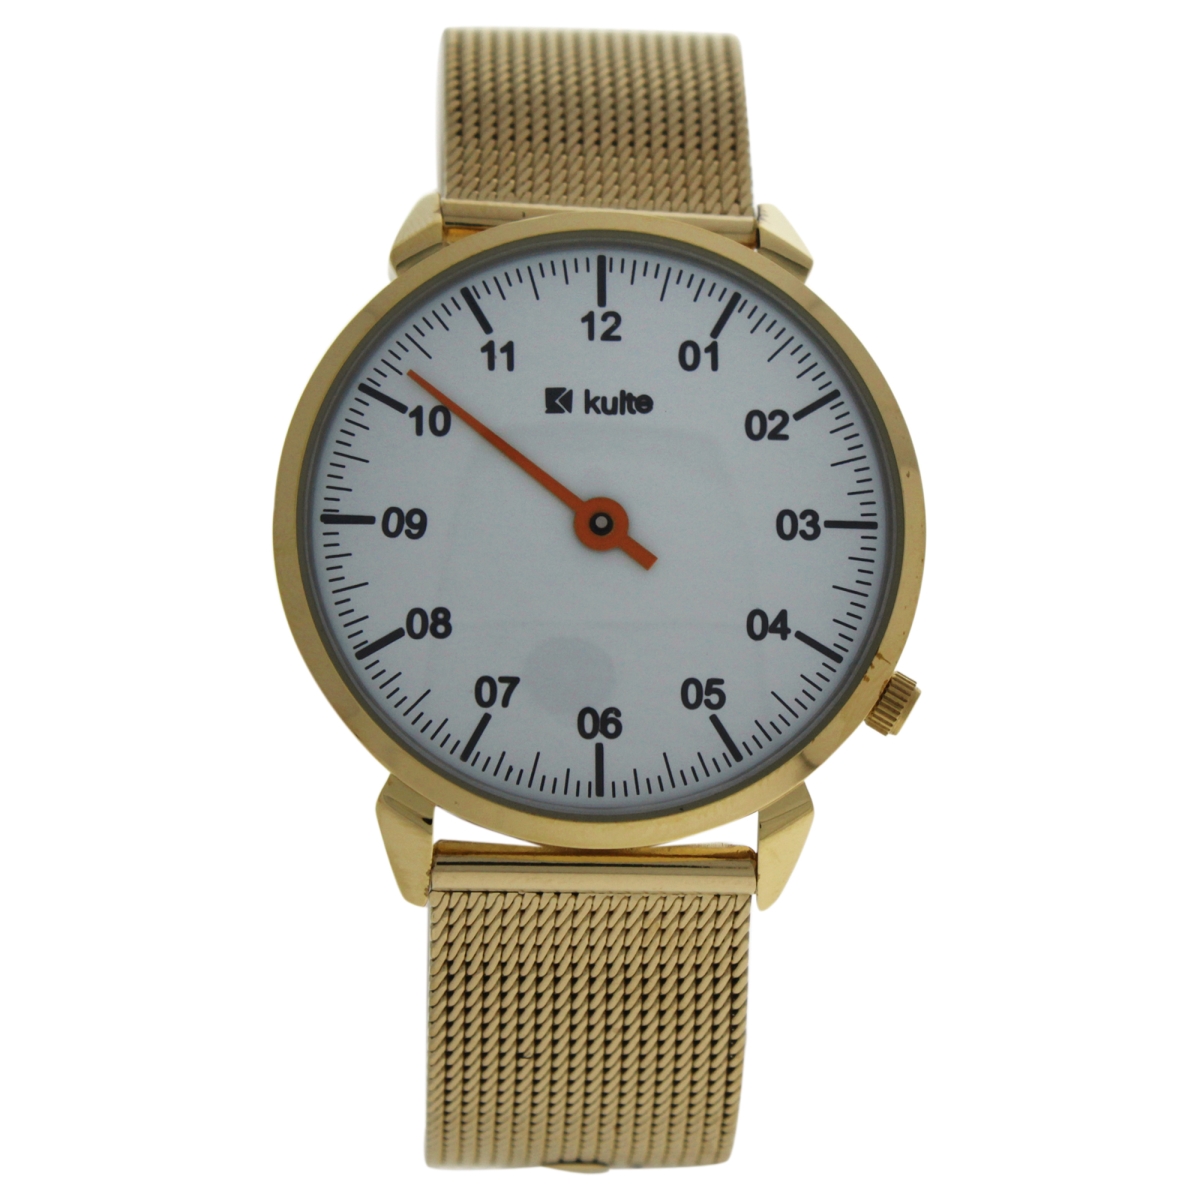 U-wat-1036 Gold Stainless Steel Mesh Bracelet Watch For Unisex - Ku15-0008